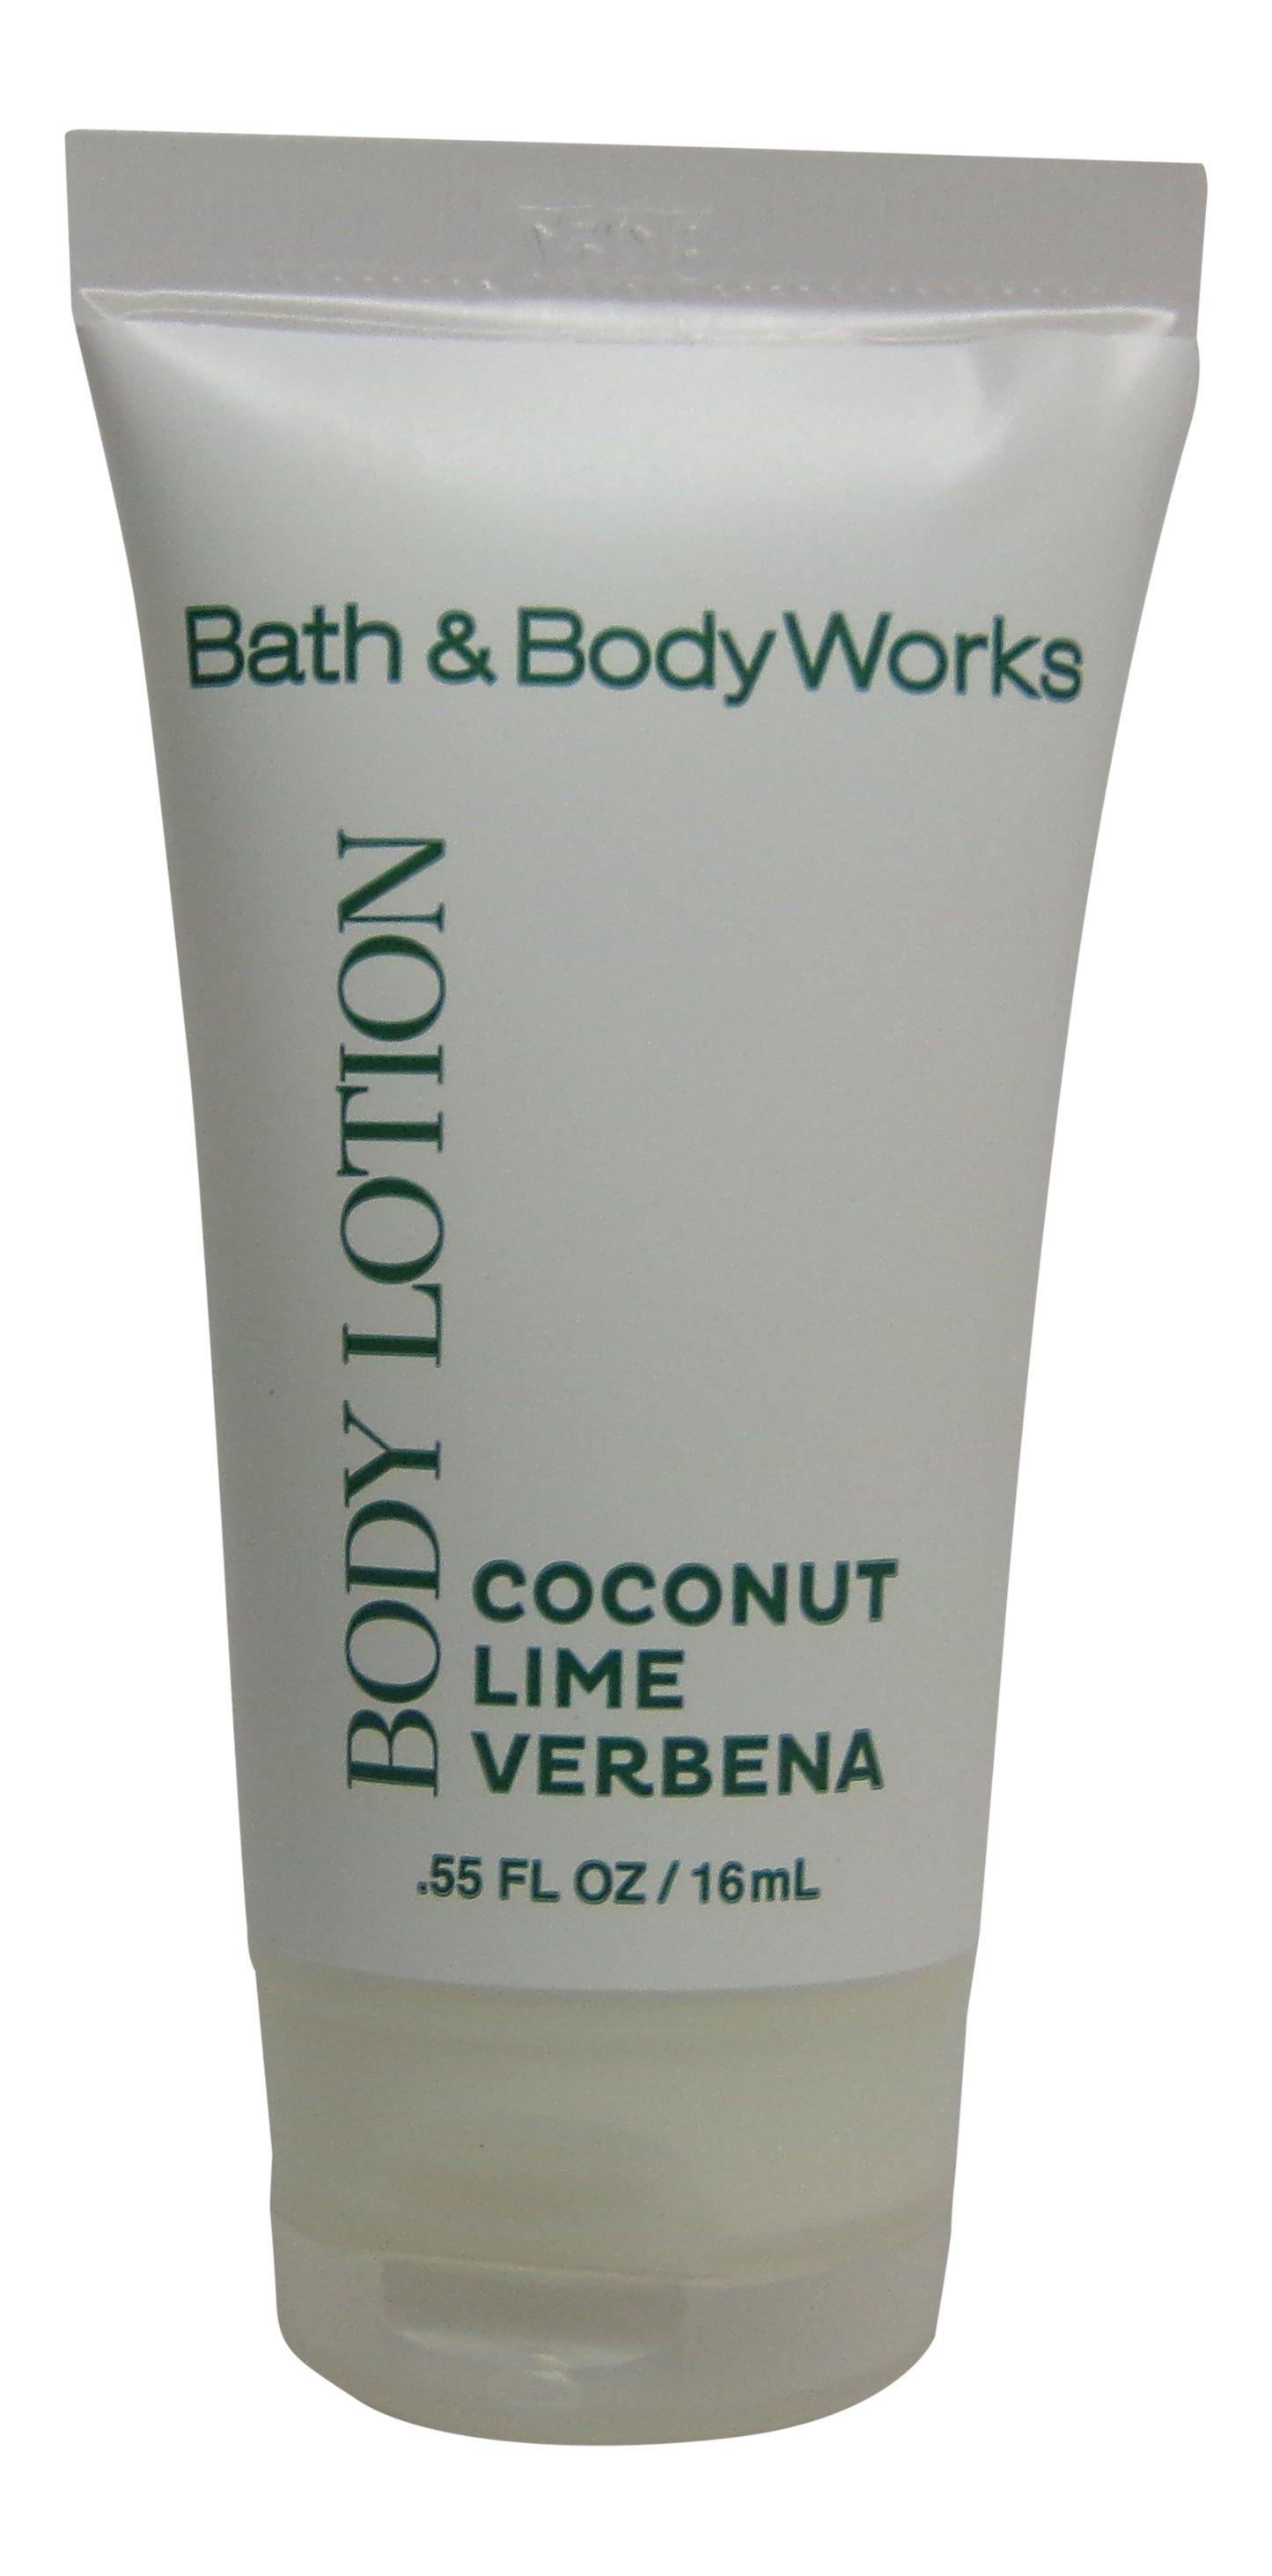 Bath & Body Works Coconut Lime Verbena Lotion lot of 6 Bottles. Total of 3.3oz